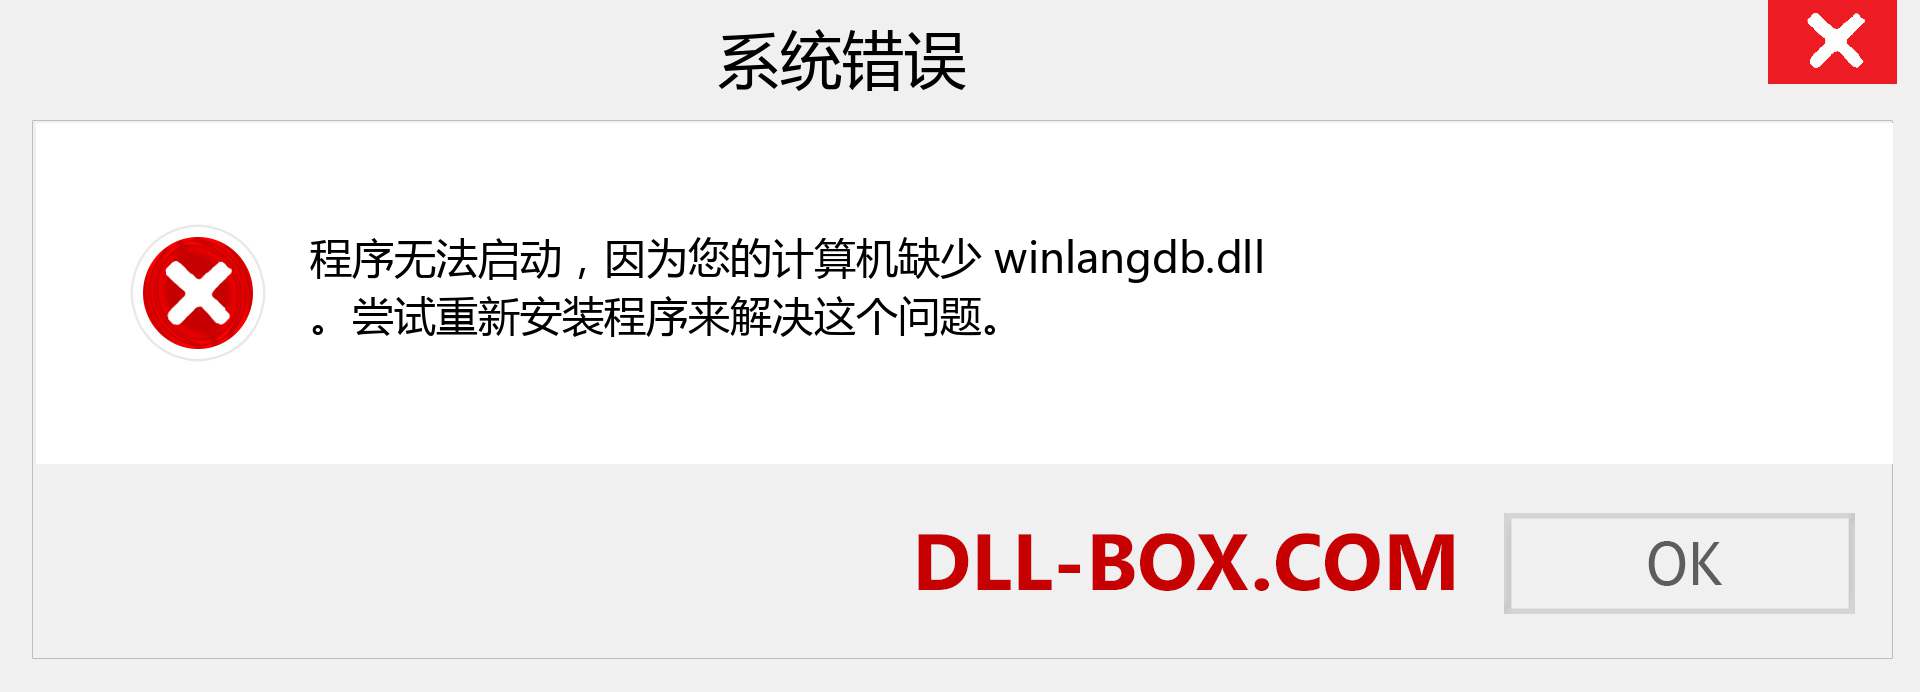 winlangdb.dll 文件丢失？。 适用于 Windows 7、8、10 的下载 - 修复 Windows、照片、图像上的 winlangdb dll 丢失错误